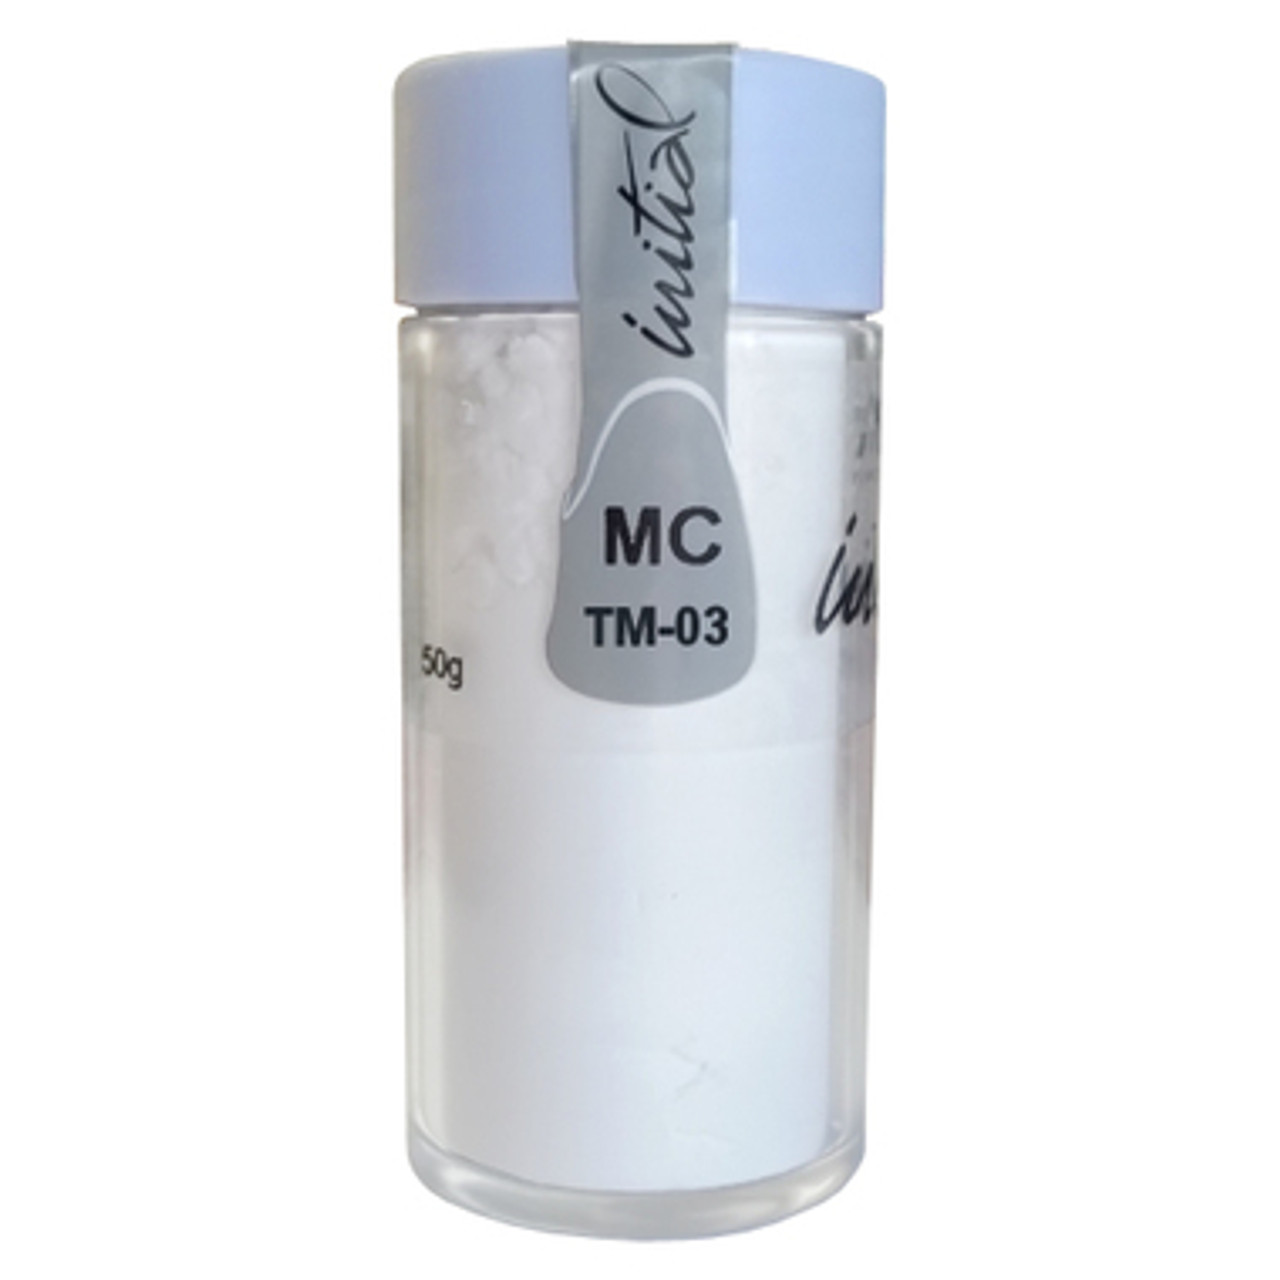 Initial MC Transl. Modifier TM-03, 50g